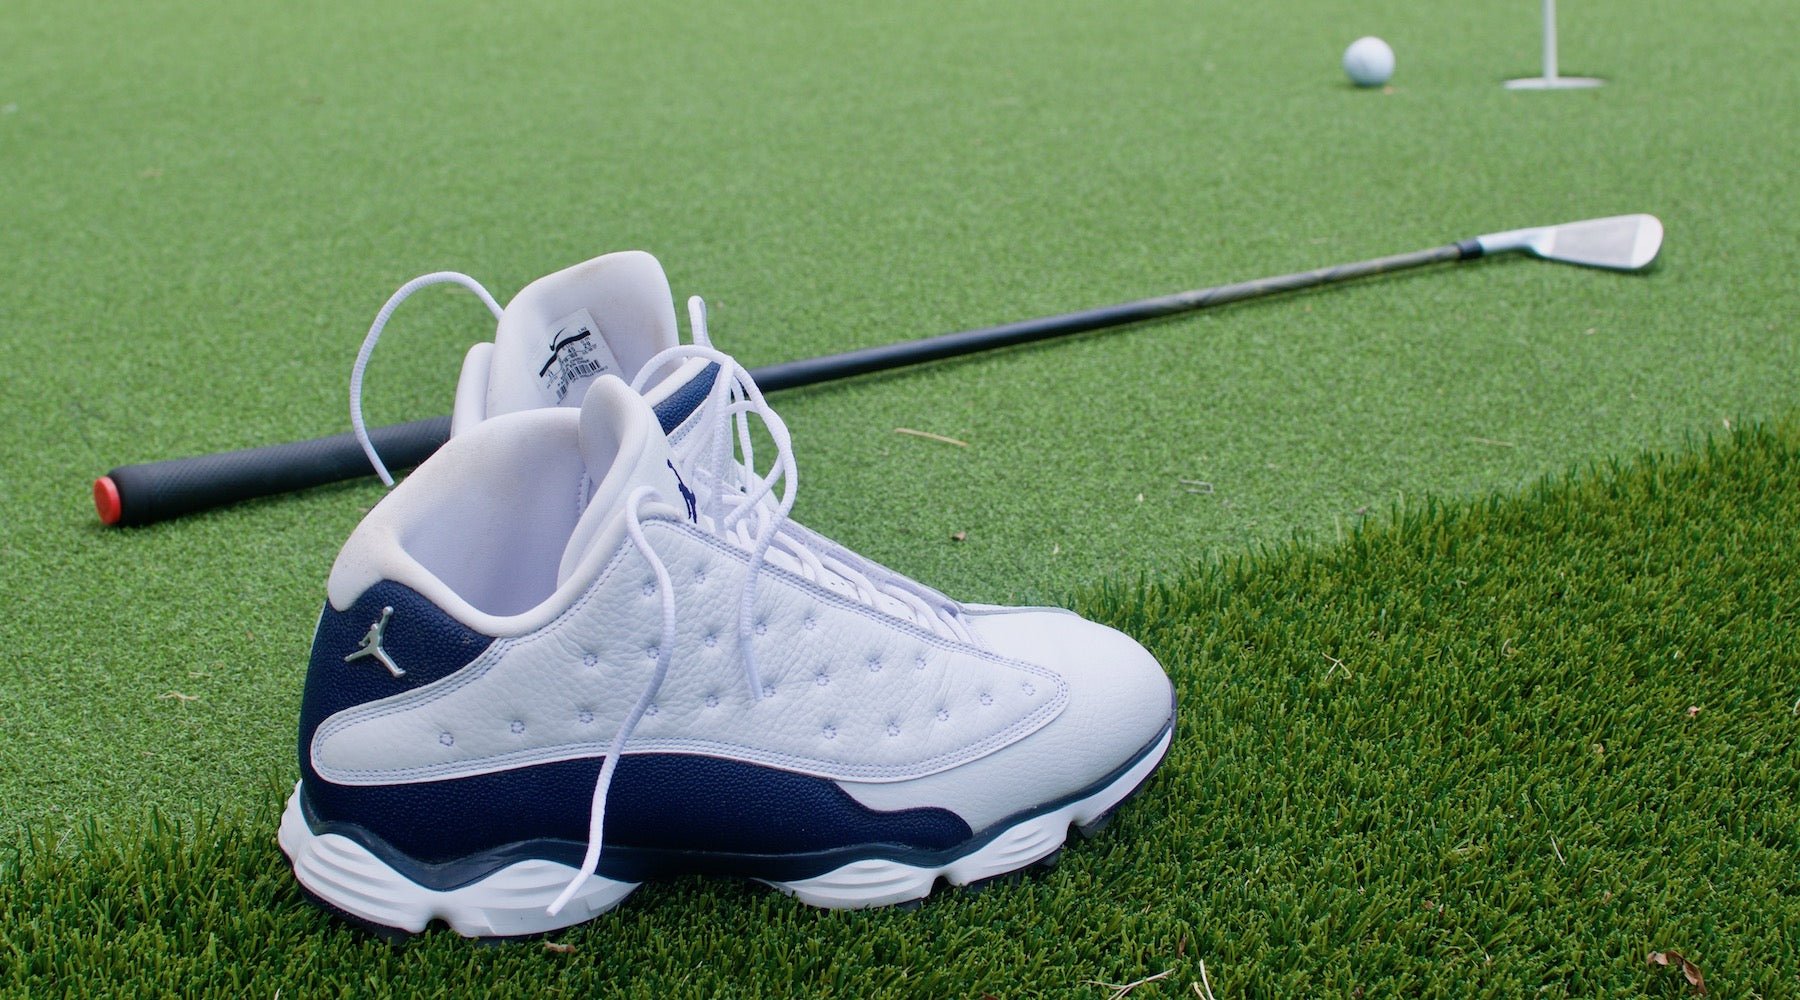 Air Jordan XIII Nike Golf Shoes Review - BestGrips.com